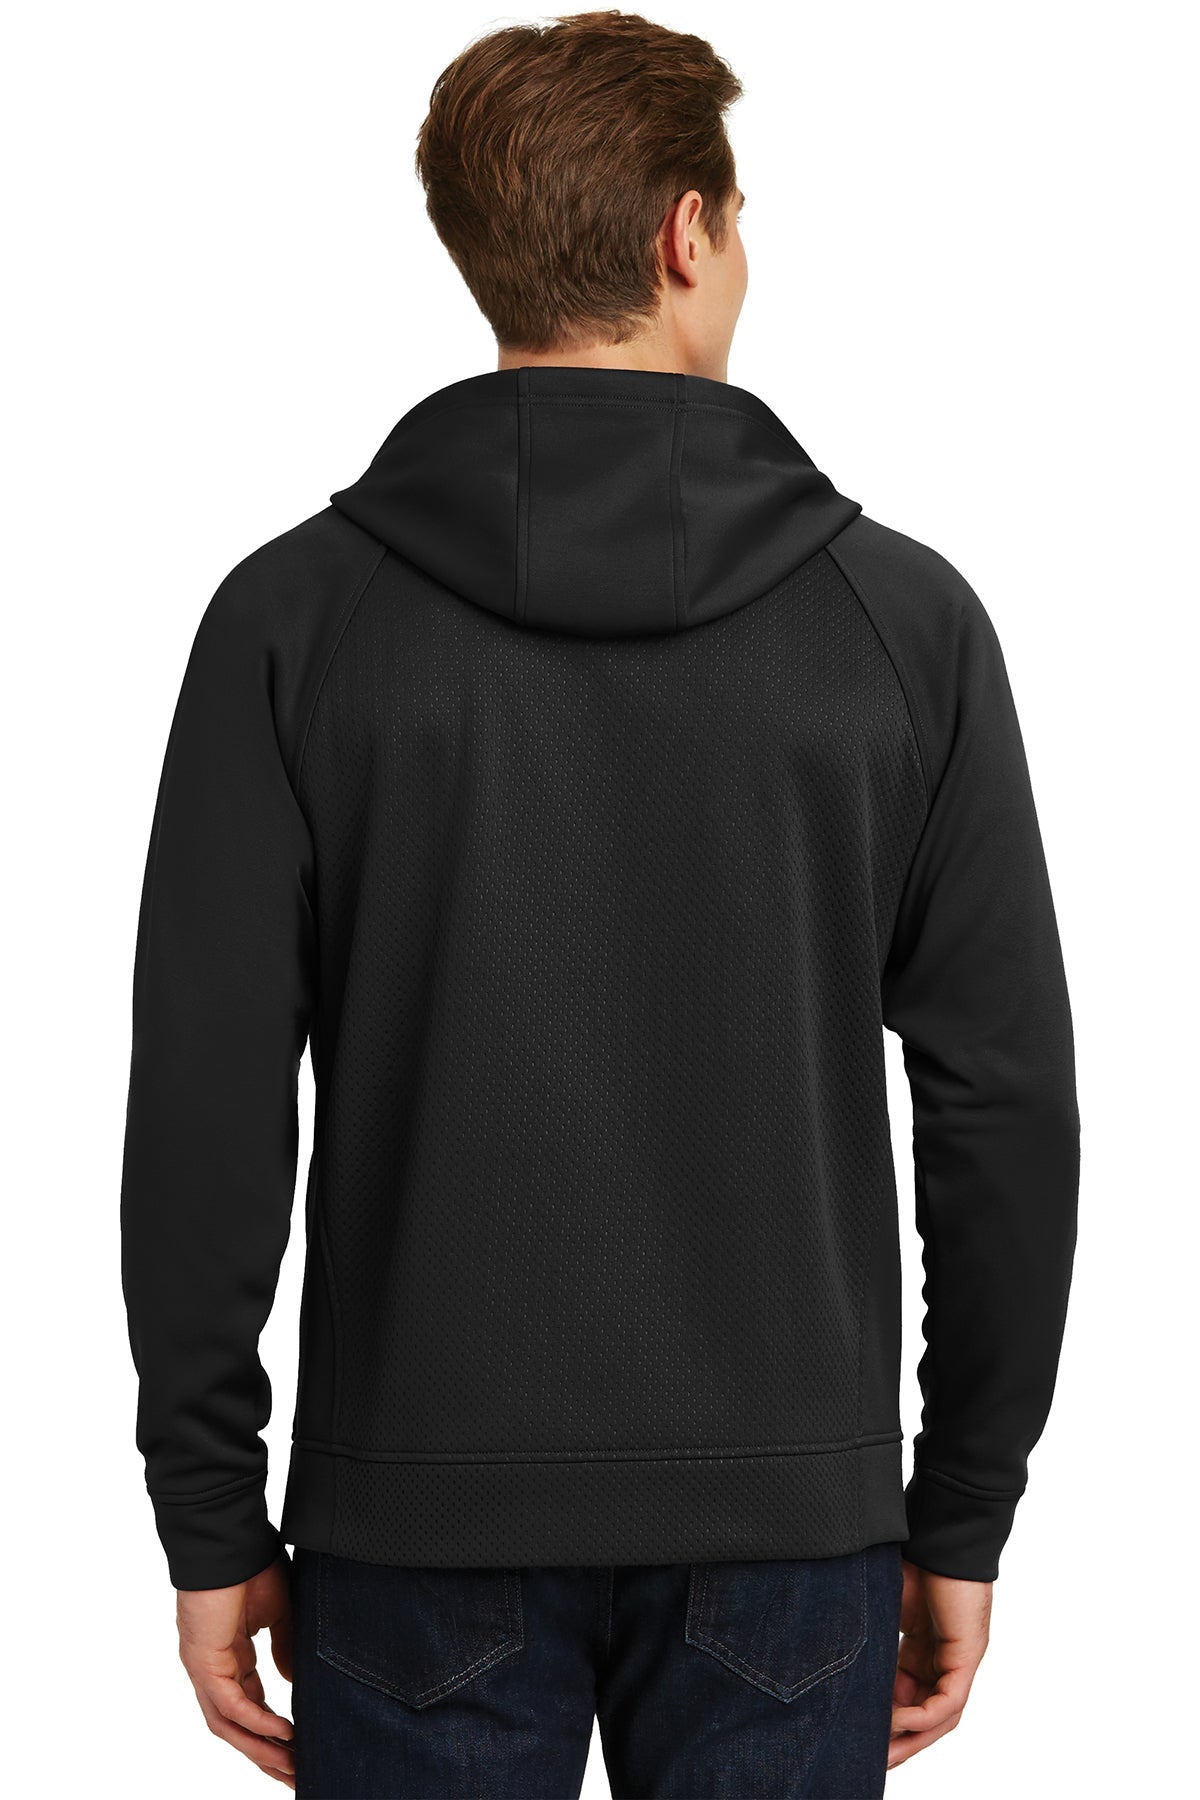 sport-tek_st295 _black_company_logo_sweatshirts